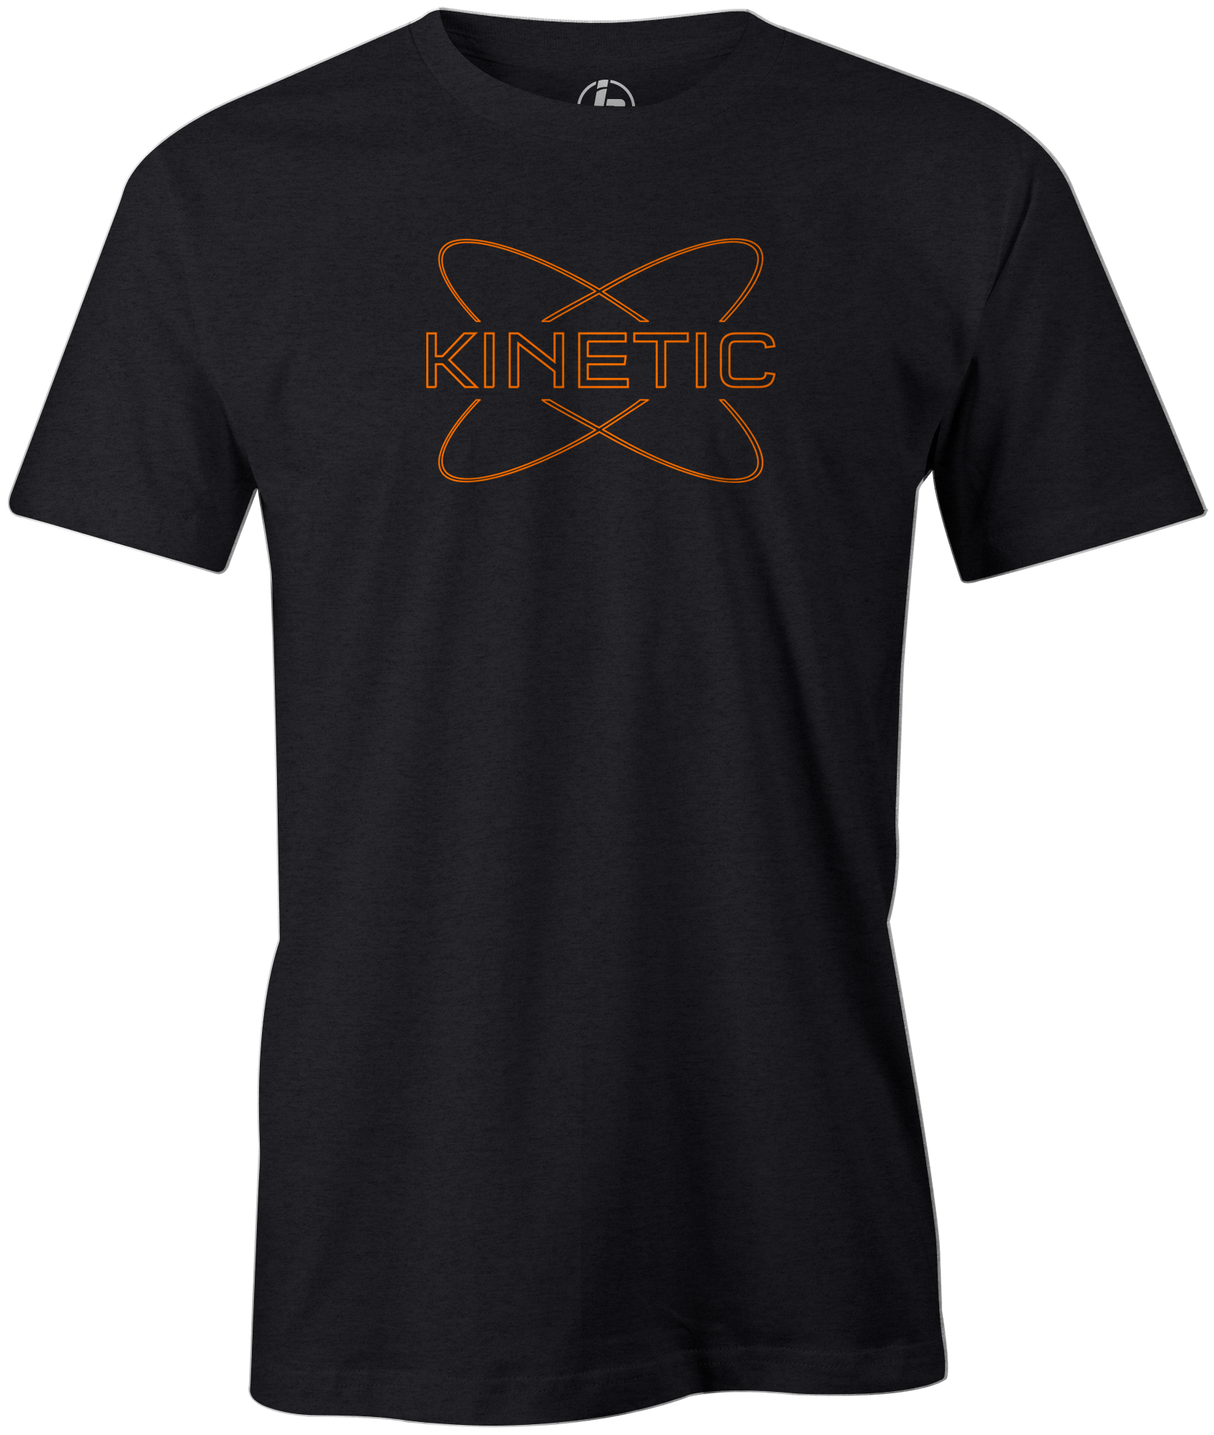 Kinetic Men's T-Shirt, Charcoal, bowling, bowling ball, track bowling, smart bowling, tshirt, tee, tee-shirt, tee shirt